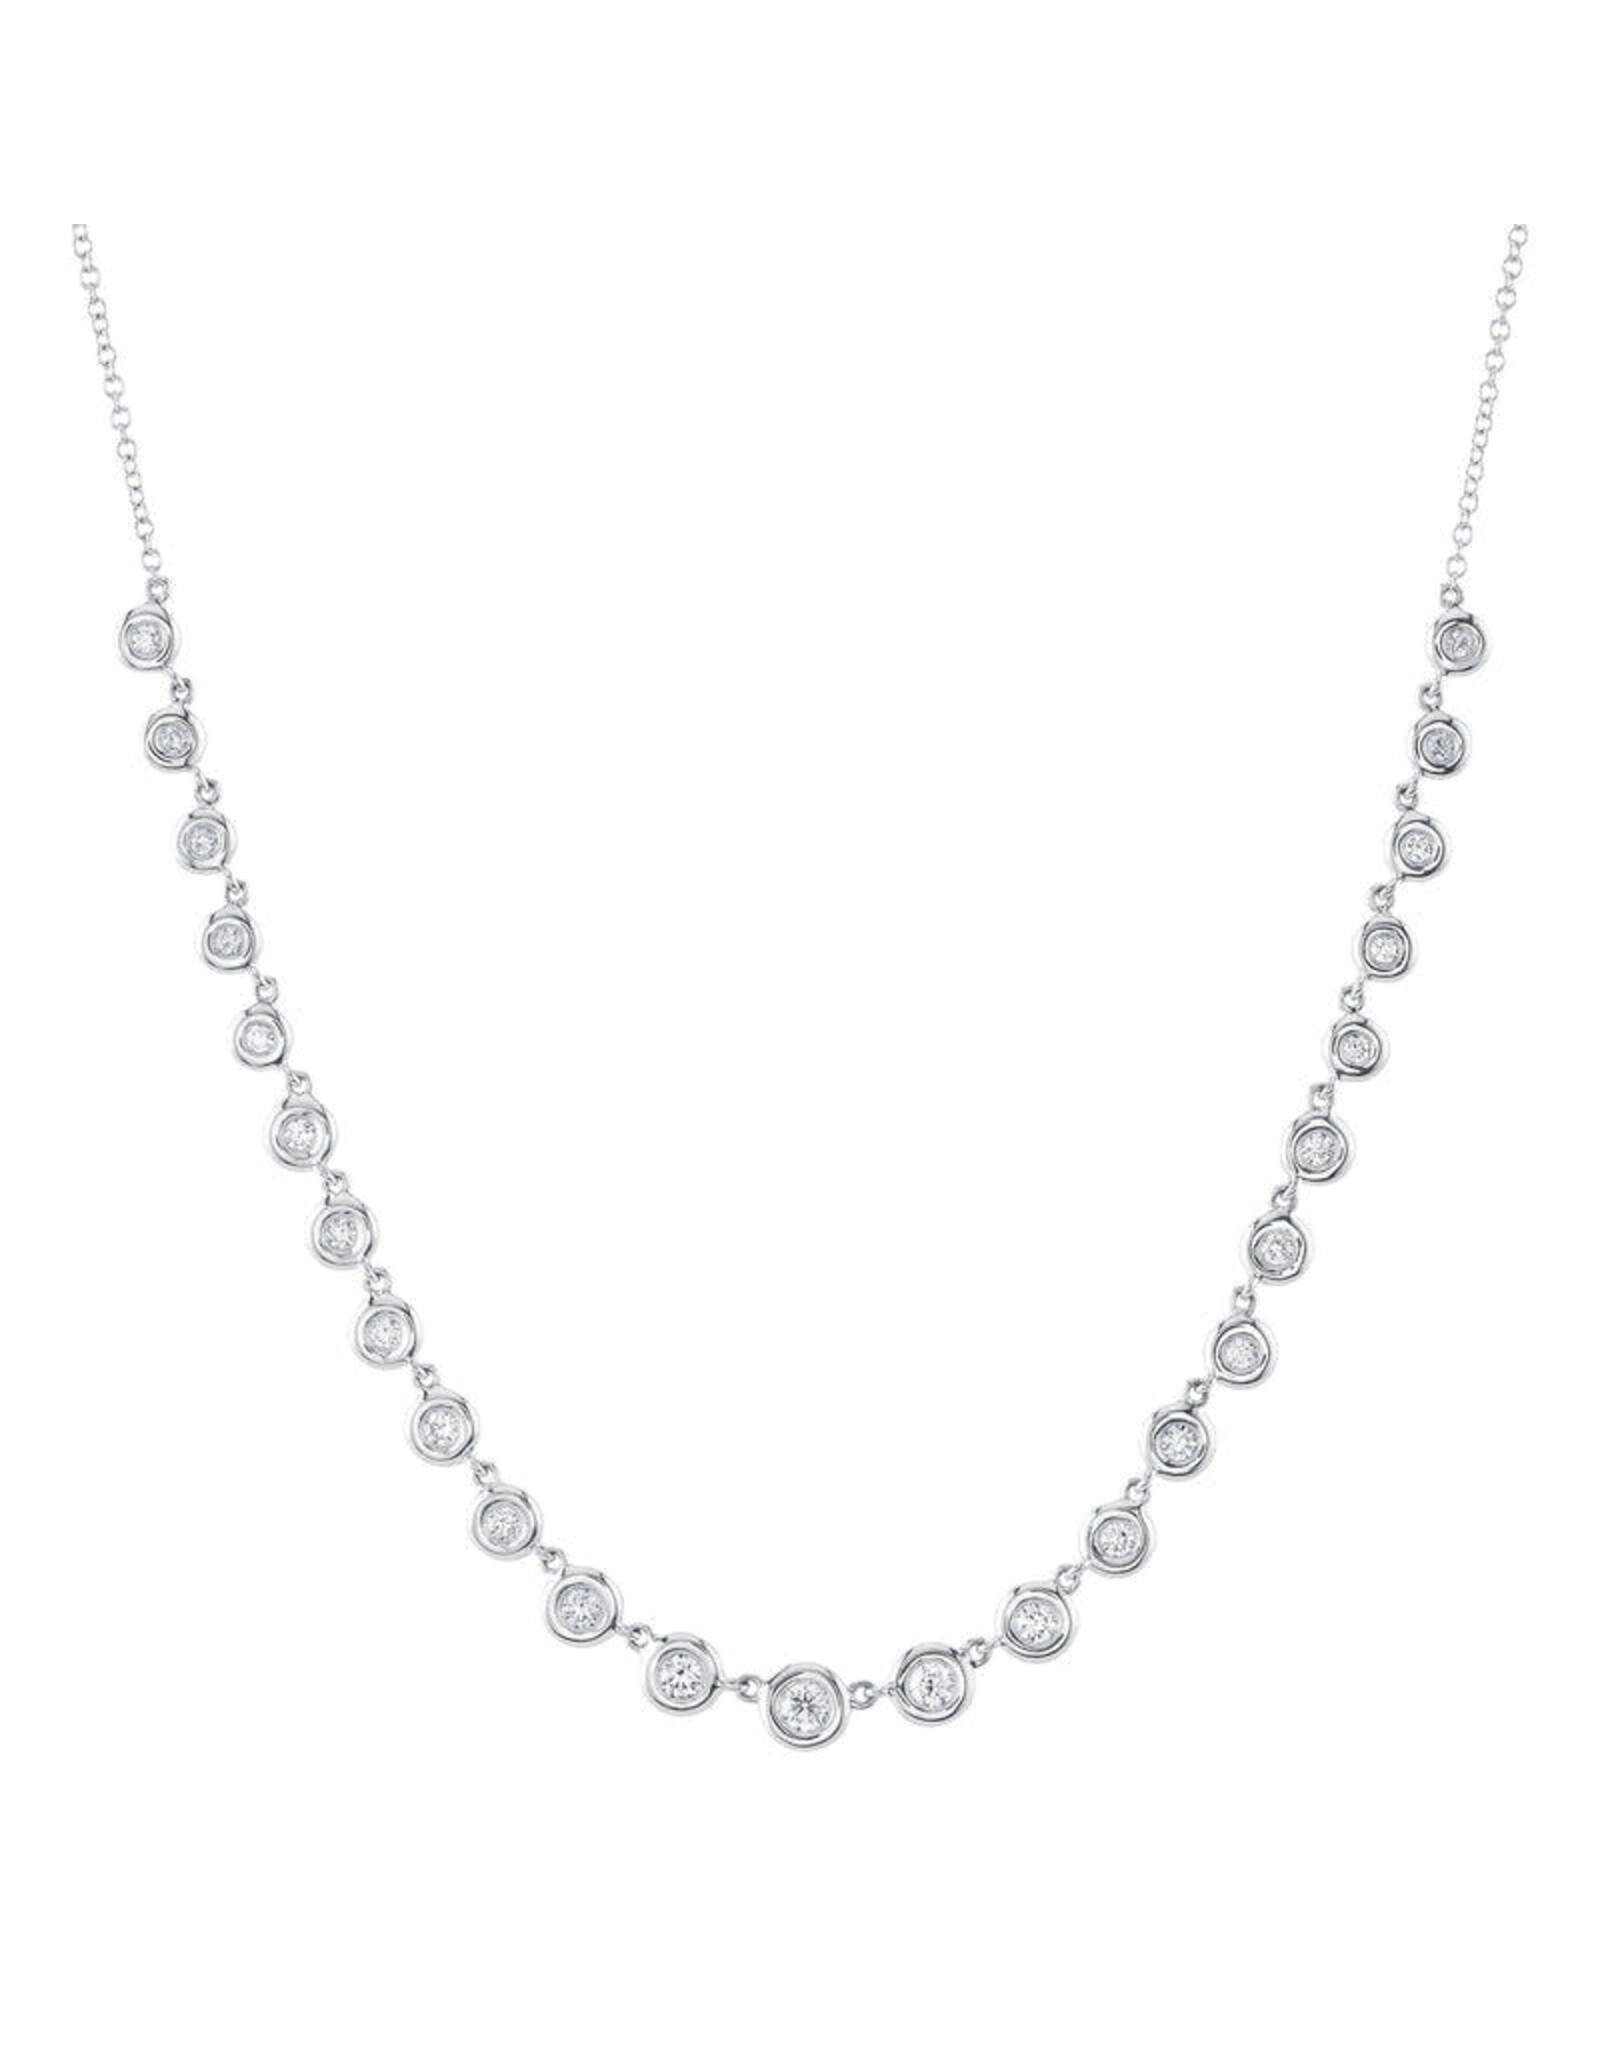 14K White Gold Bezel Set Diamond Necklace, D: 0.60ct